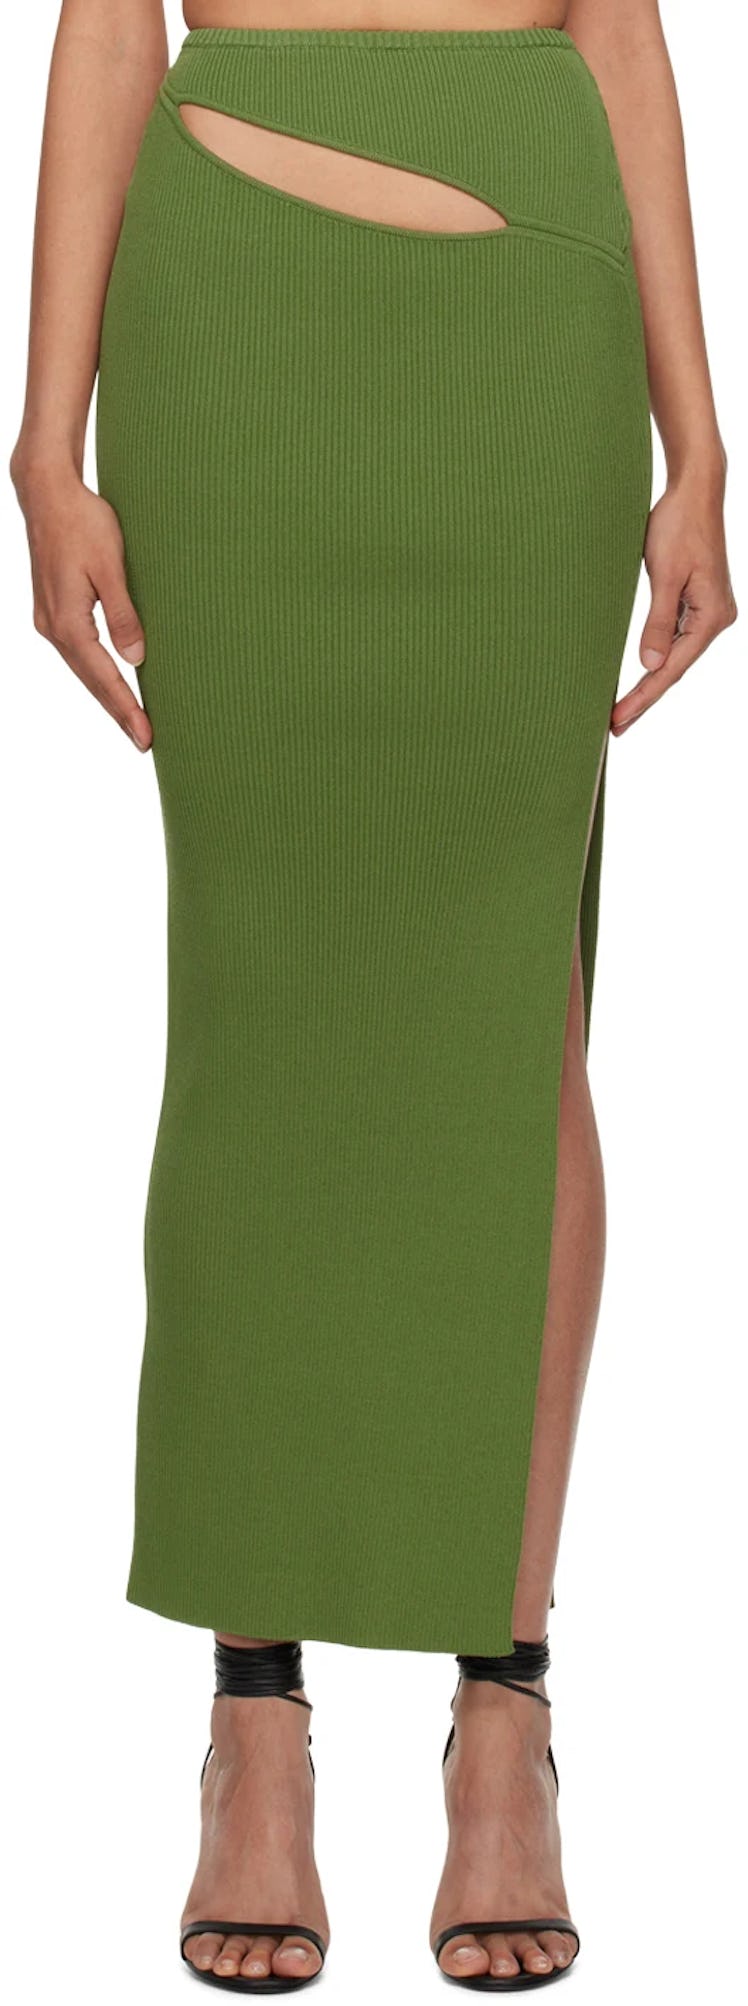 Green Hip Slashed Maxi Skirt